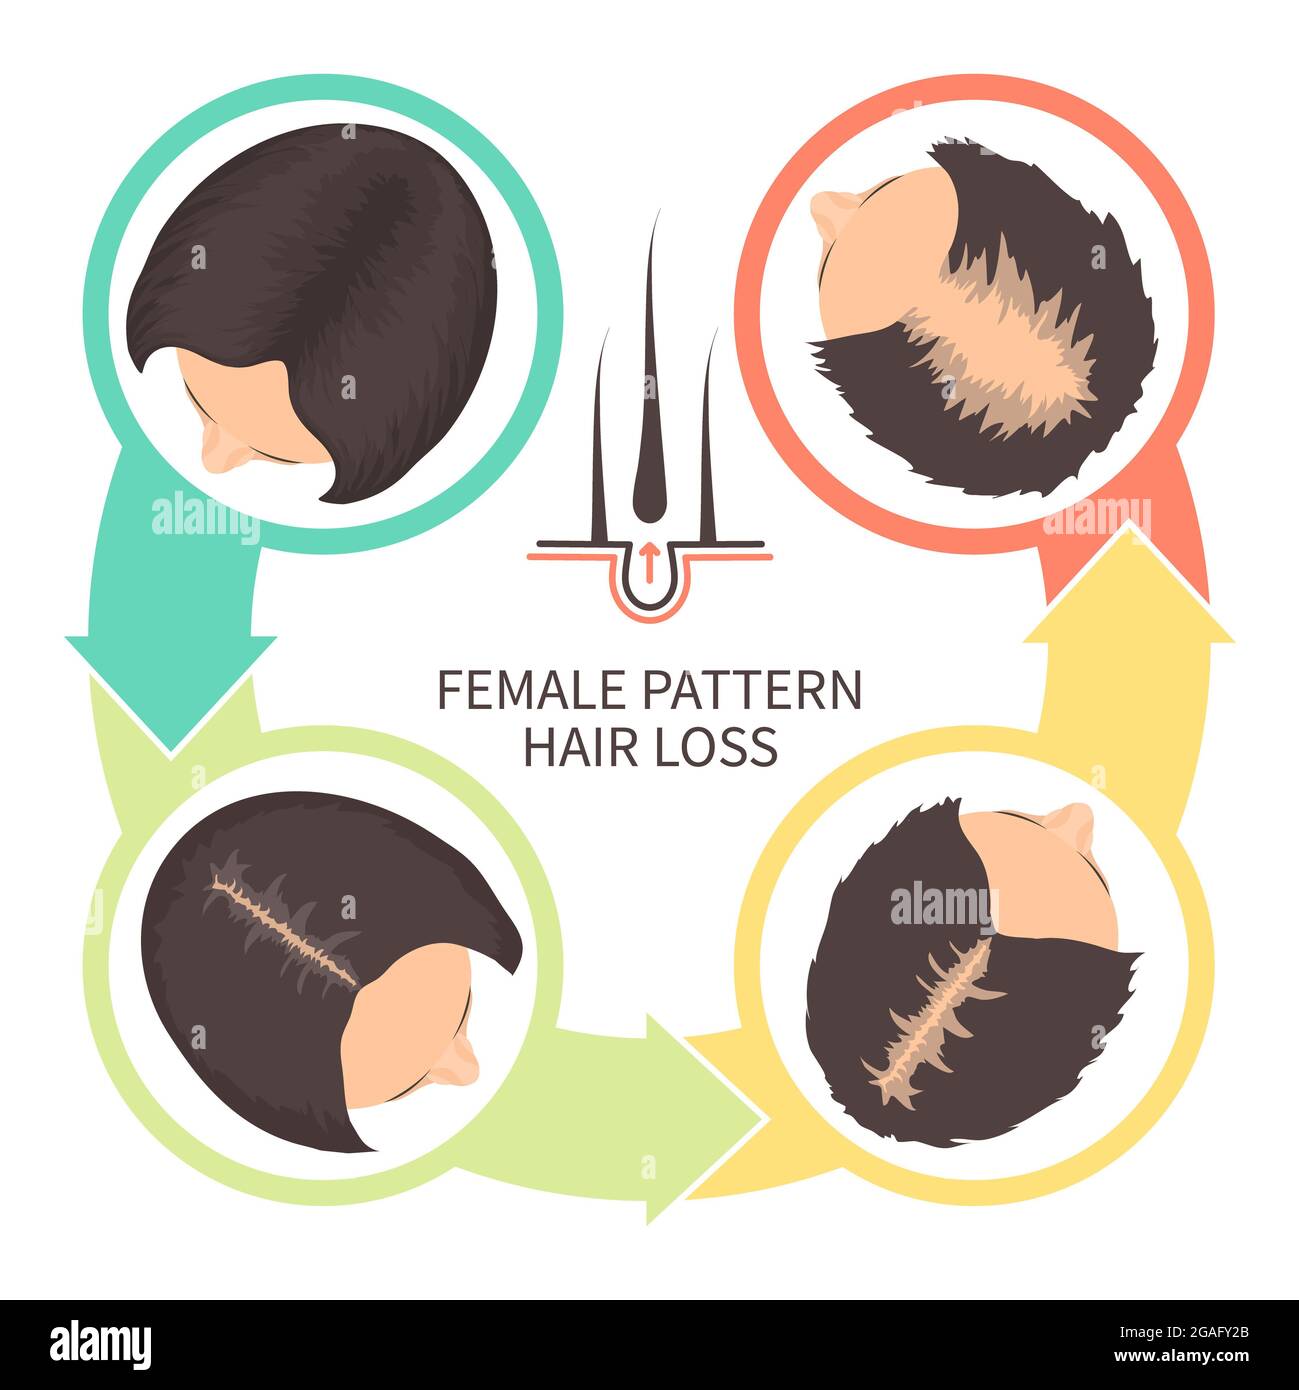 Female pattern hair loss, illustration Stock Photo